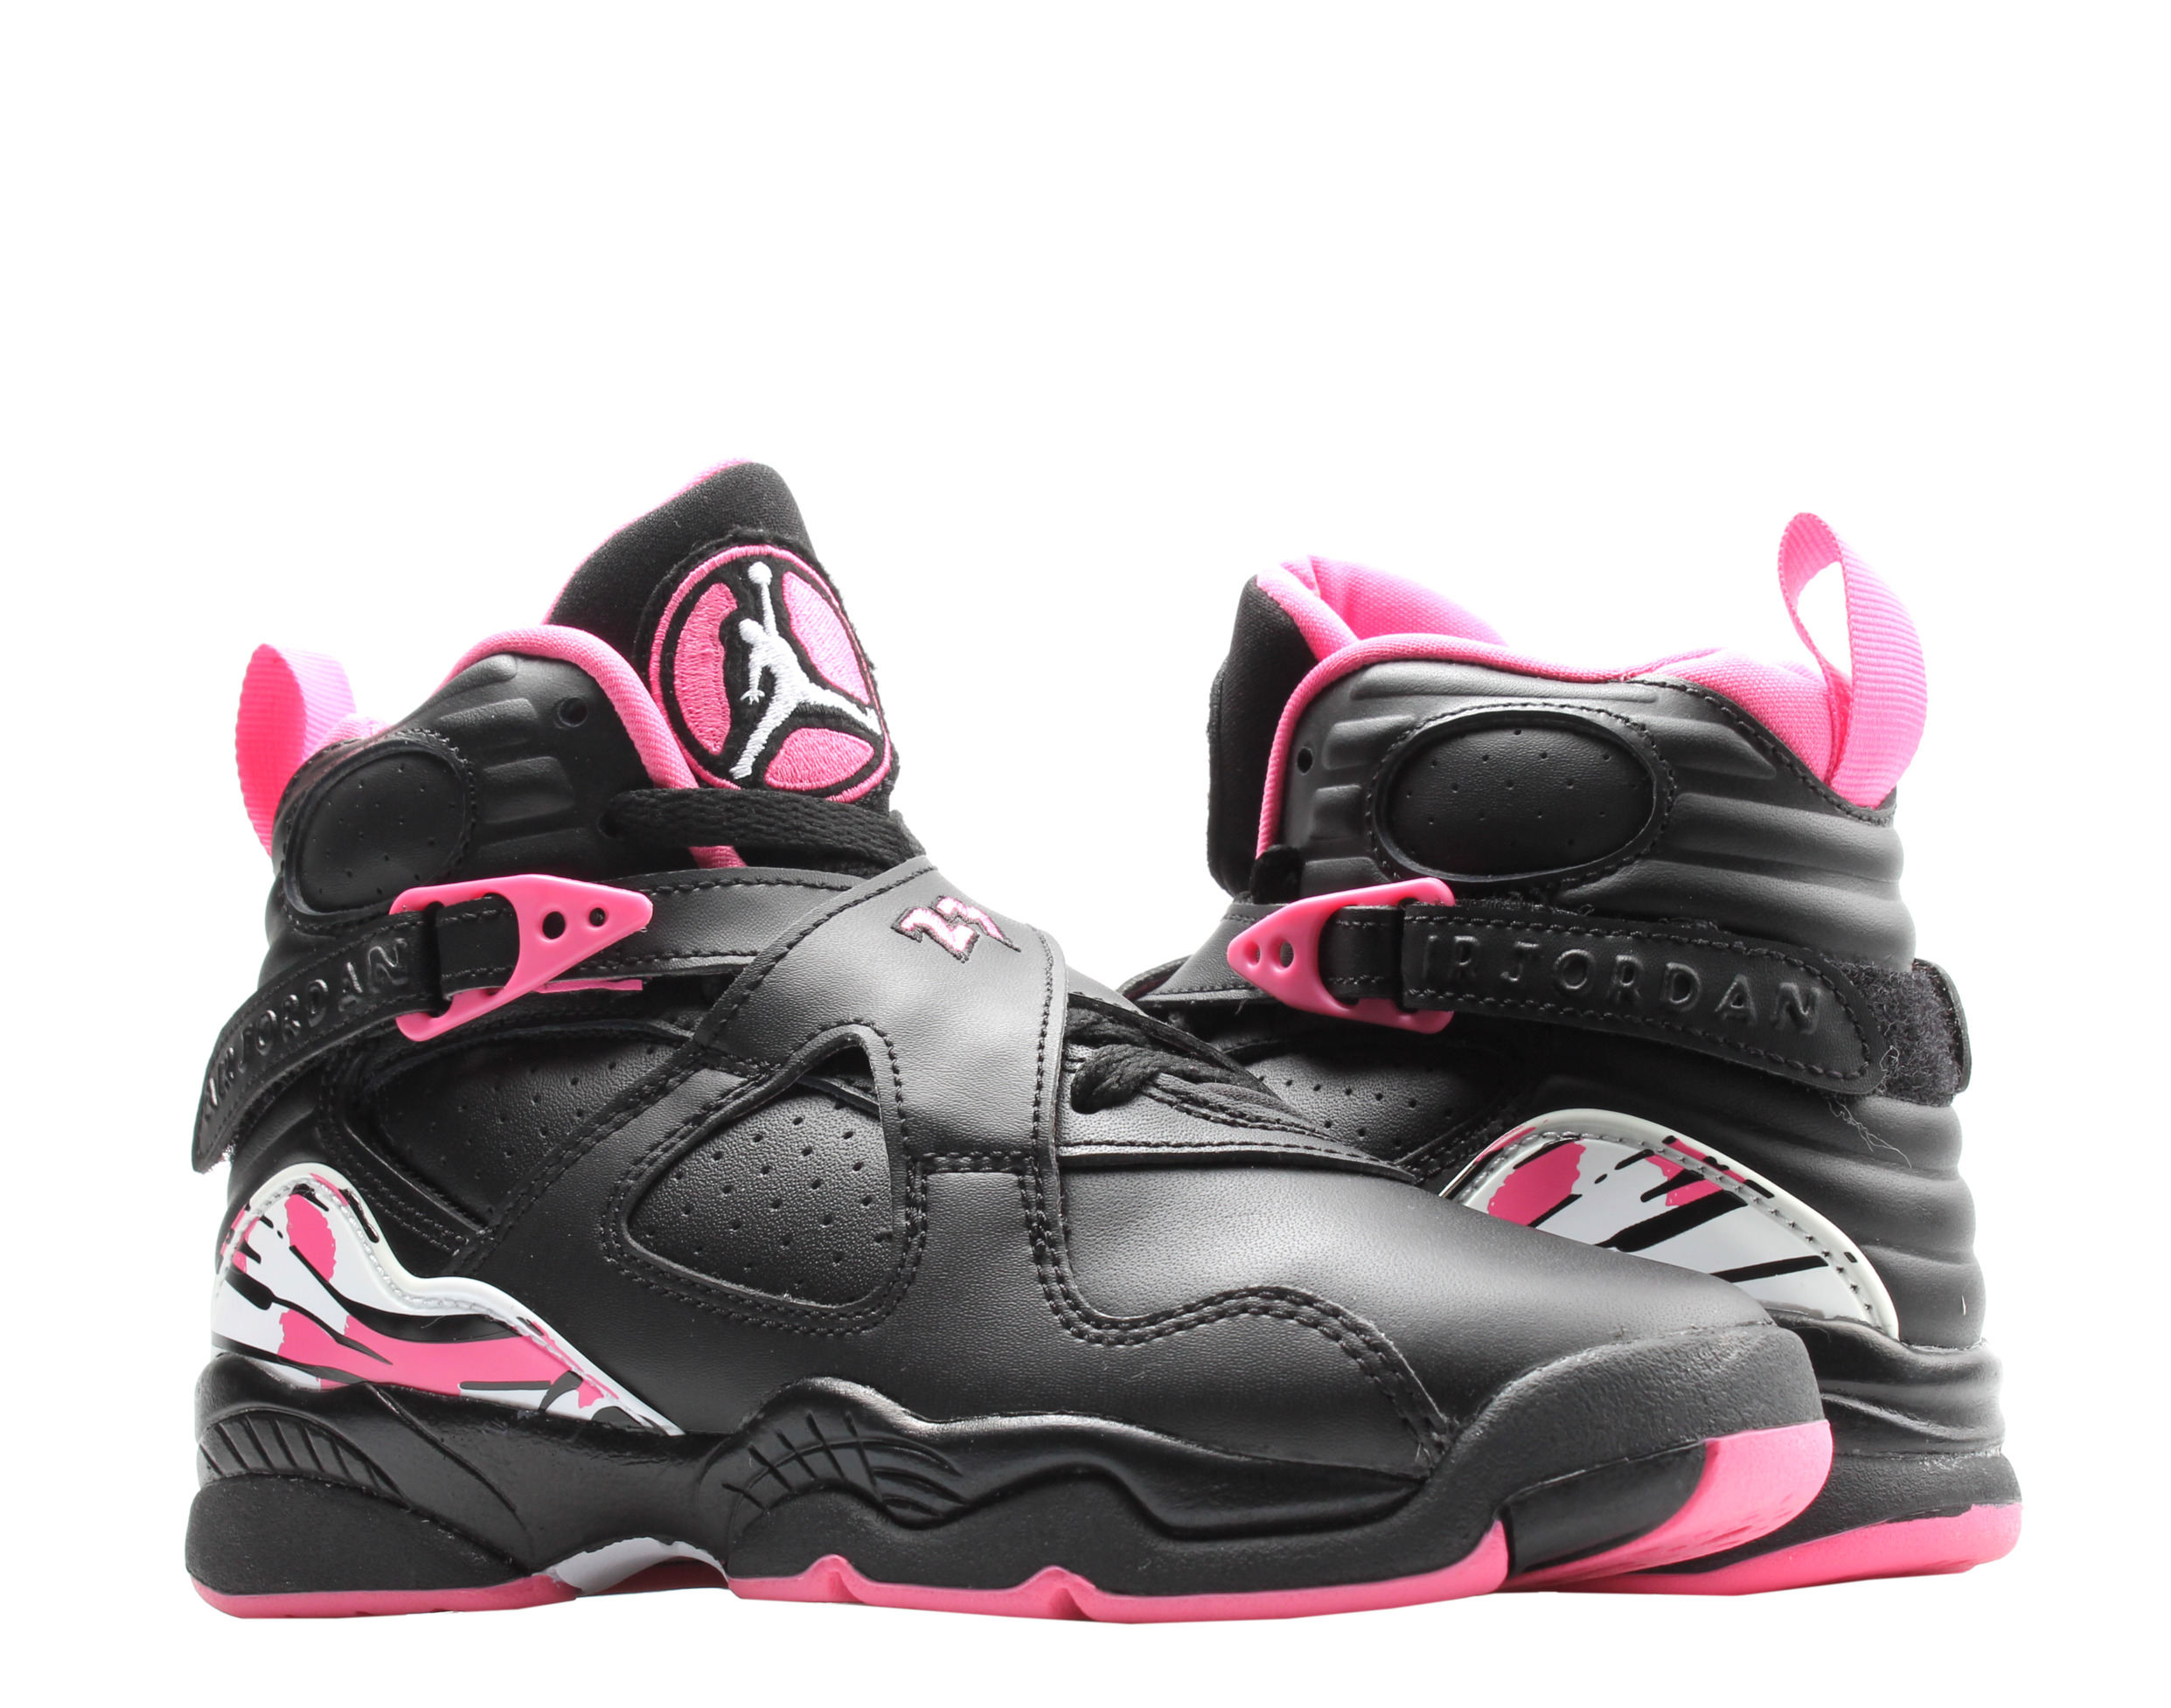 Nike Air Jordan 8 Retro (GS) Big Girls Basketball Shoes Size 6.5 - image 1 of 6